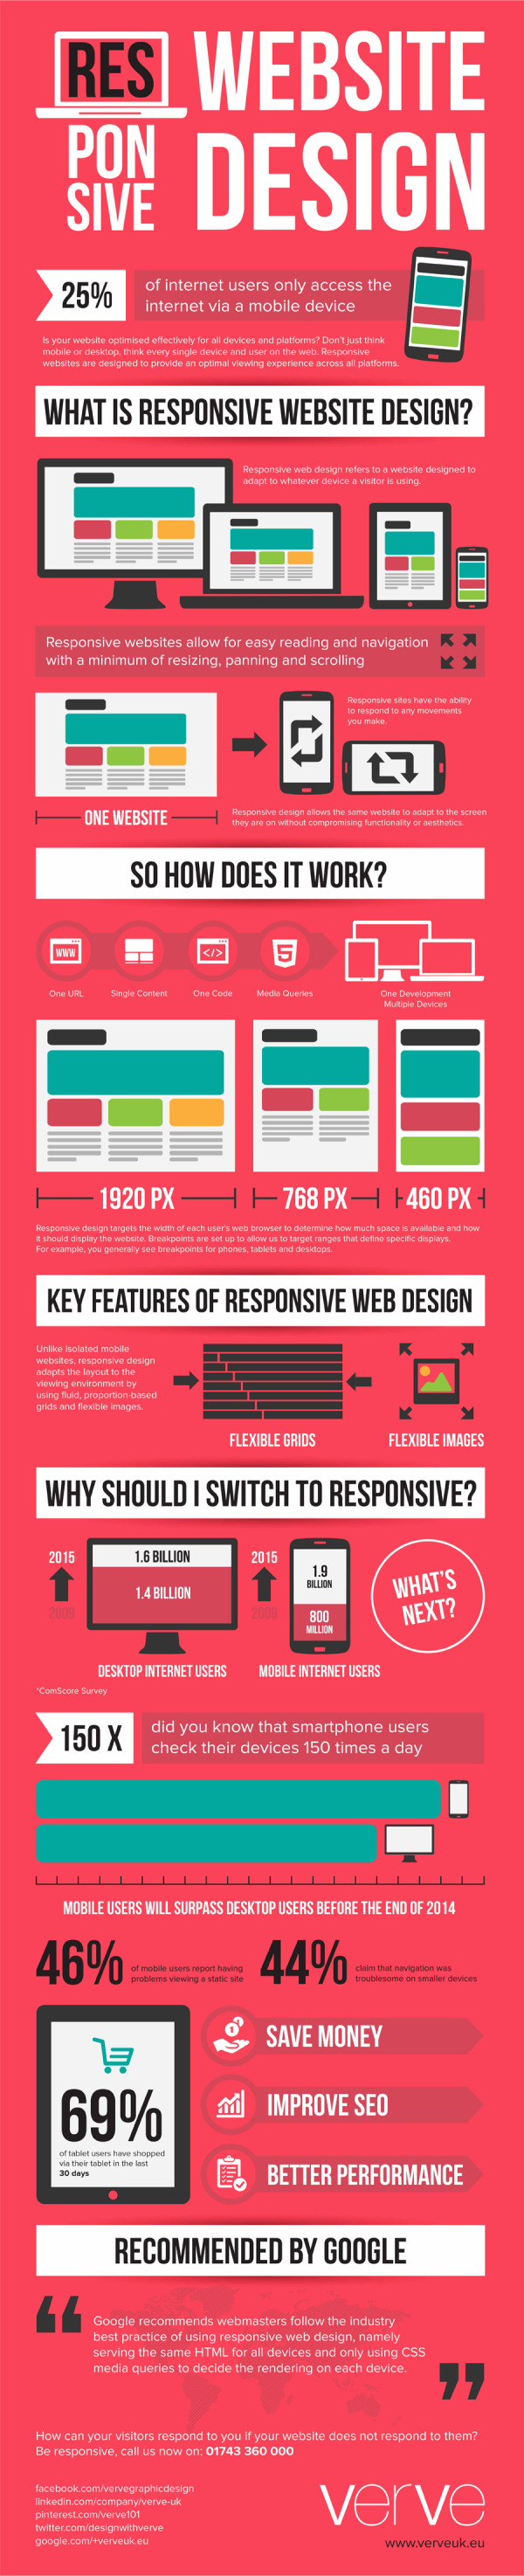 Responsive Web Design infographic